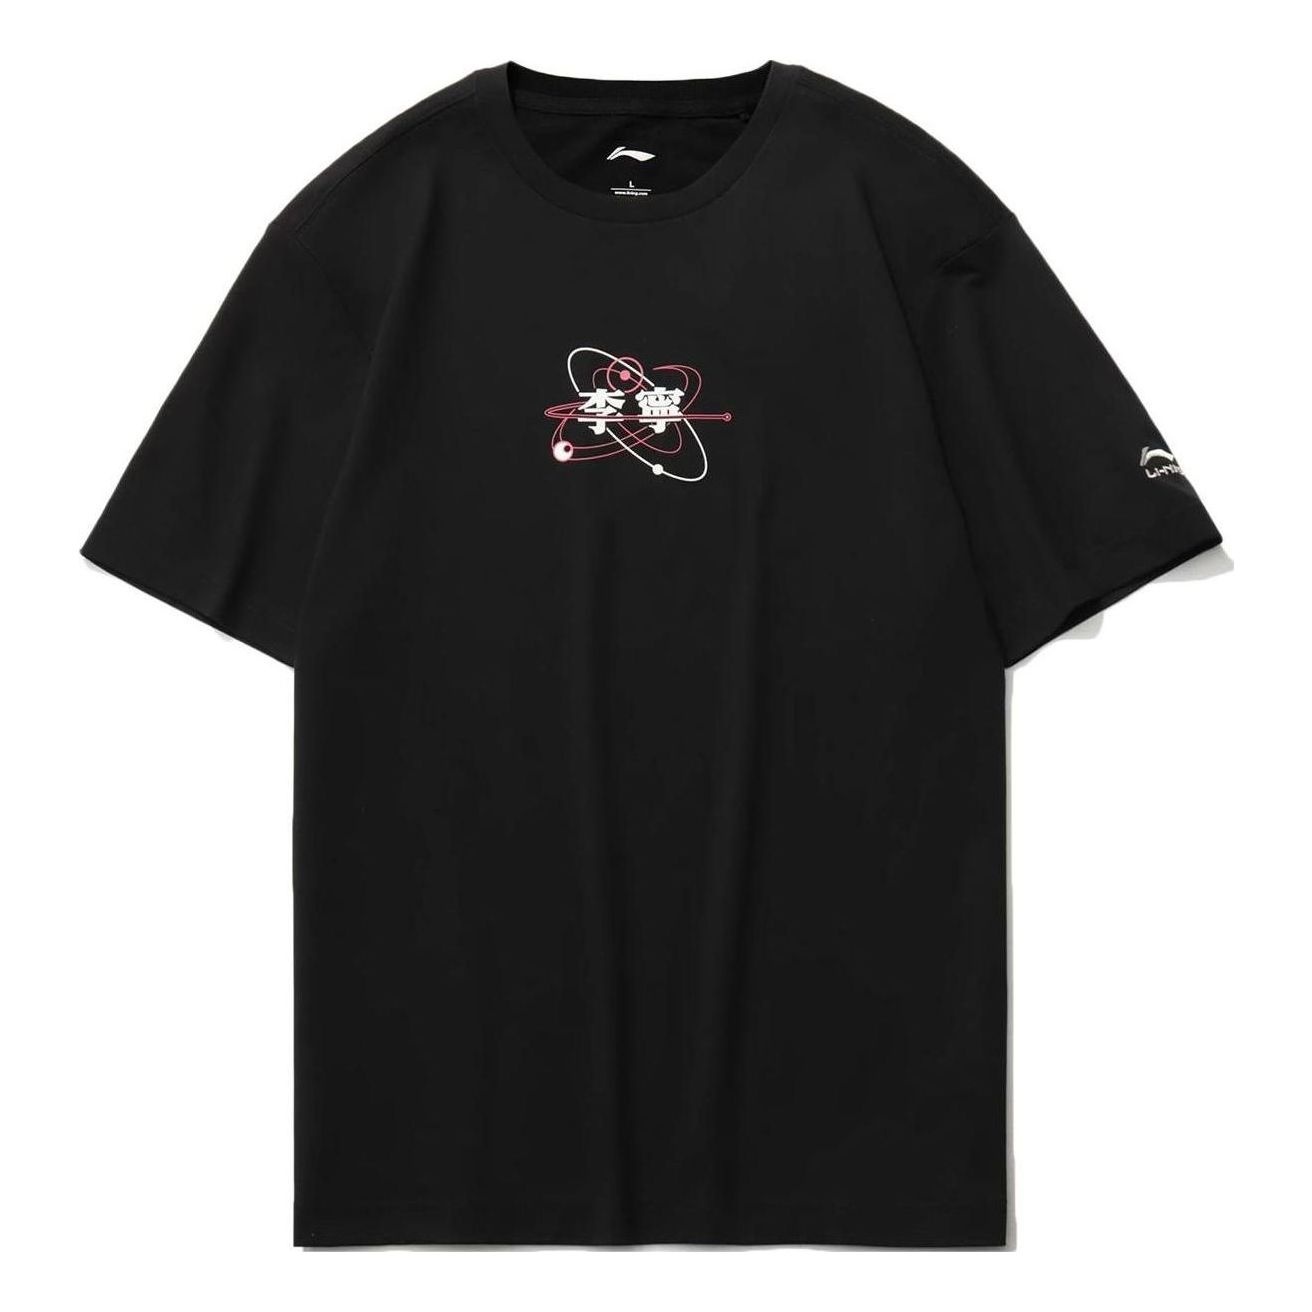 Li-Ning Atom Graphic T-shirt 'Black' AHST735-1 - 1